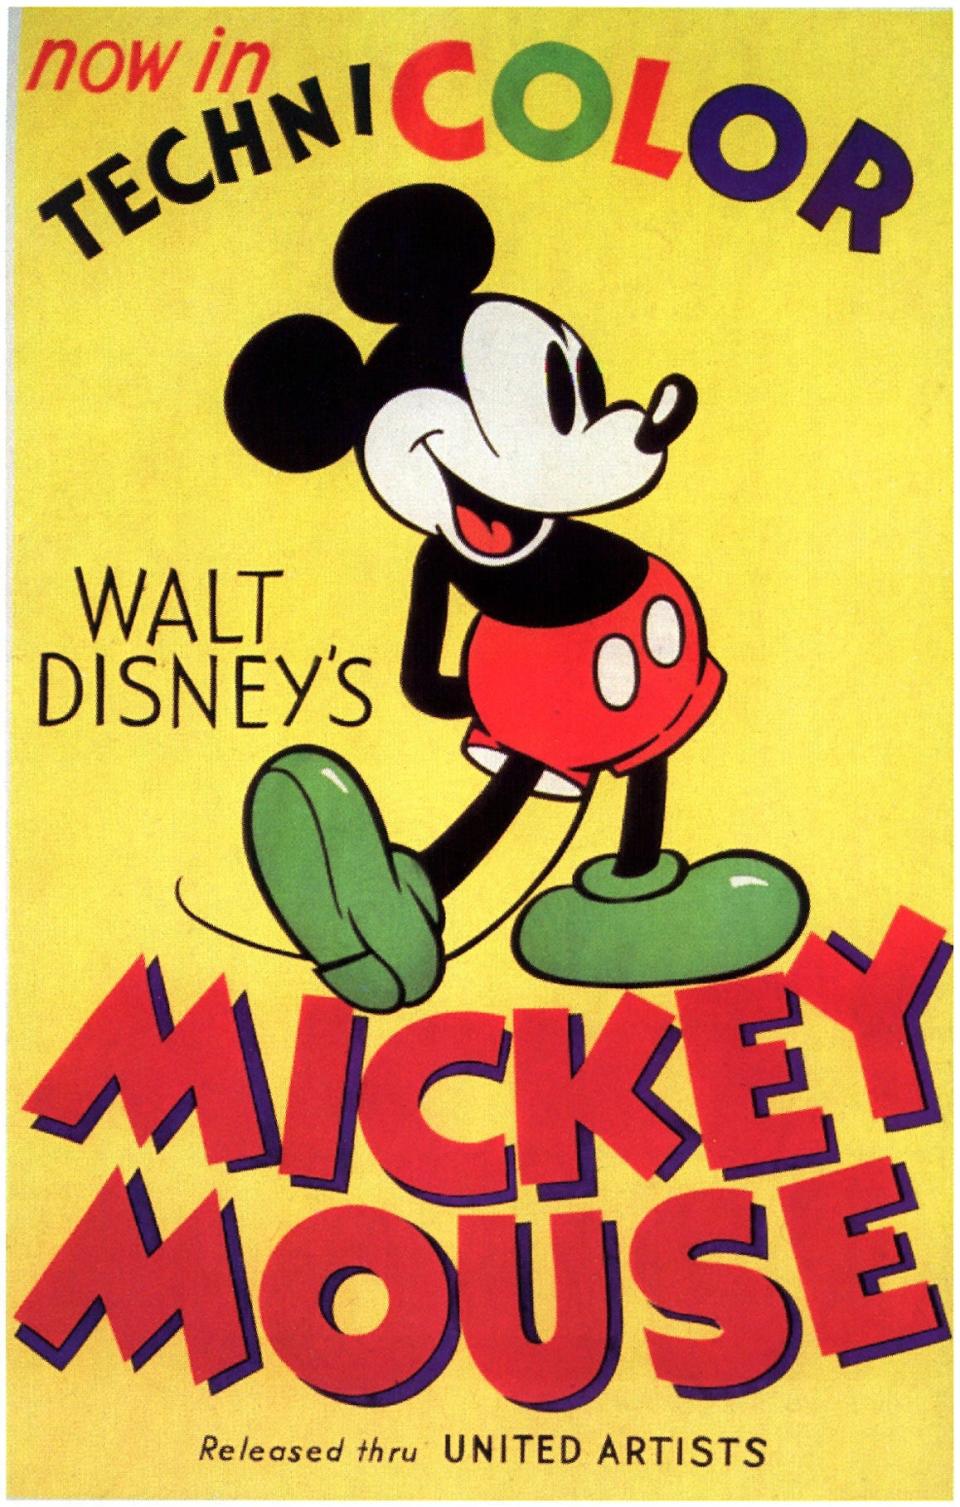 Mickey Mouse poster circa 1930s.